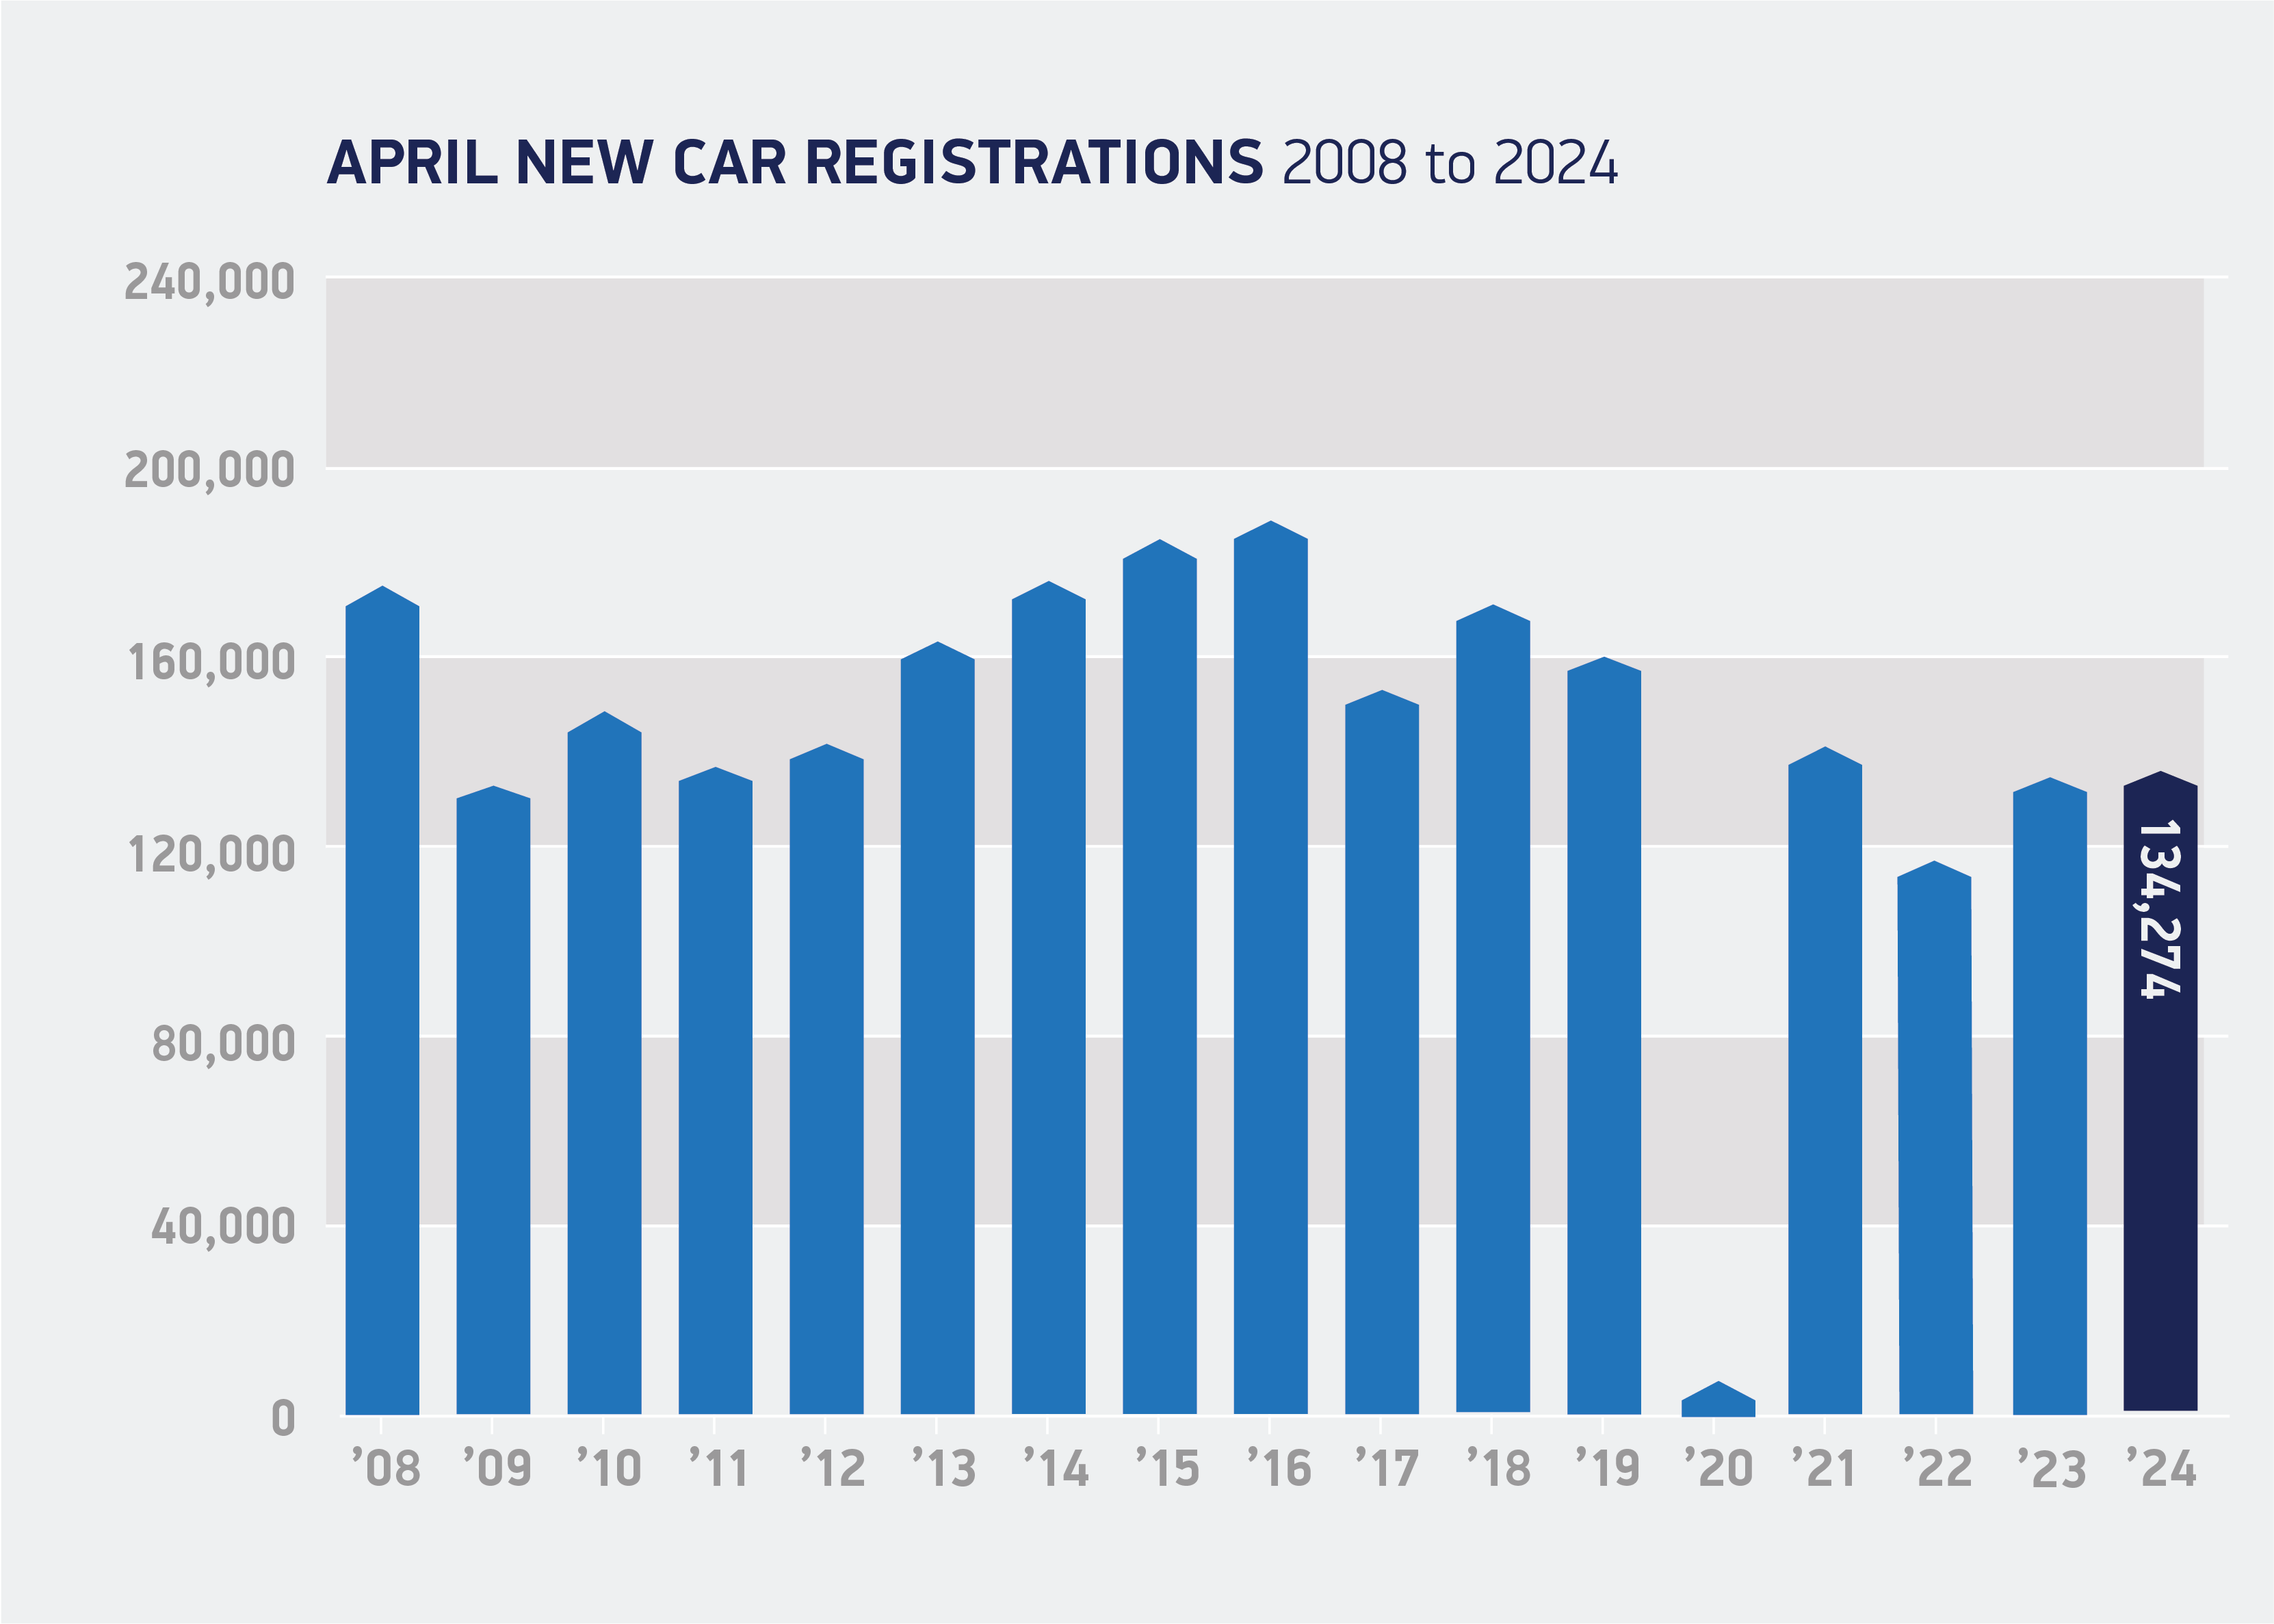 April registrations 2008 to 2024